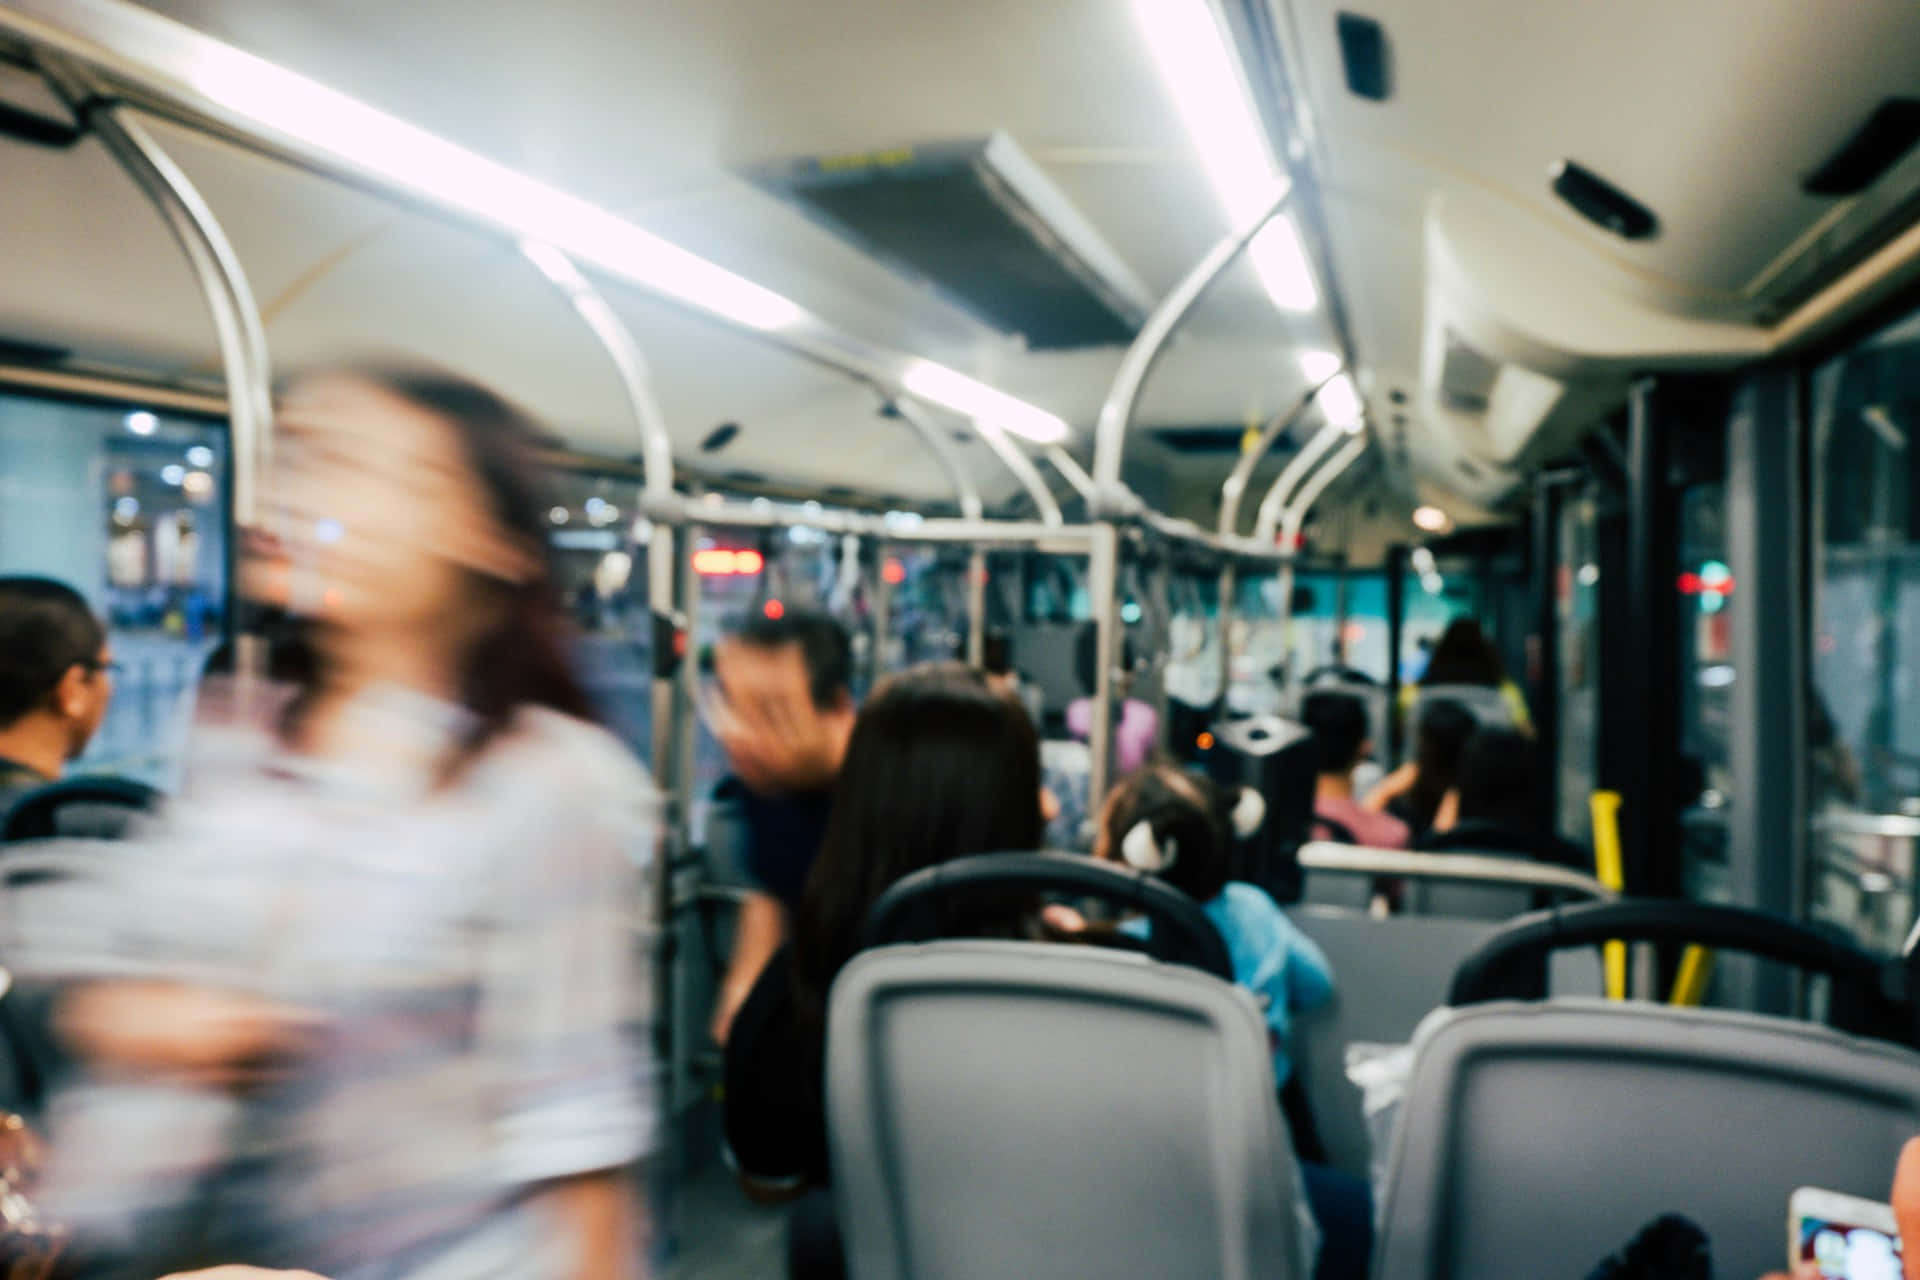 Blurry Bus Ride Nighttime Aesthetic.jpg Wallpaper